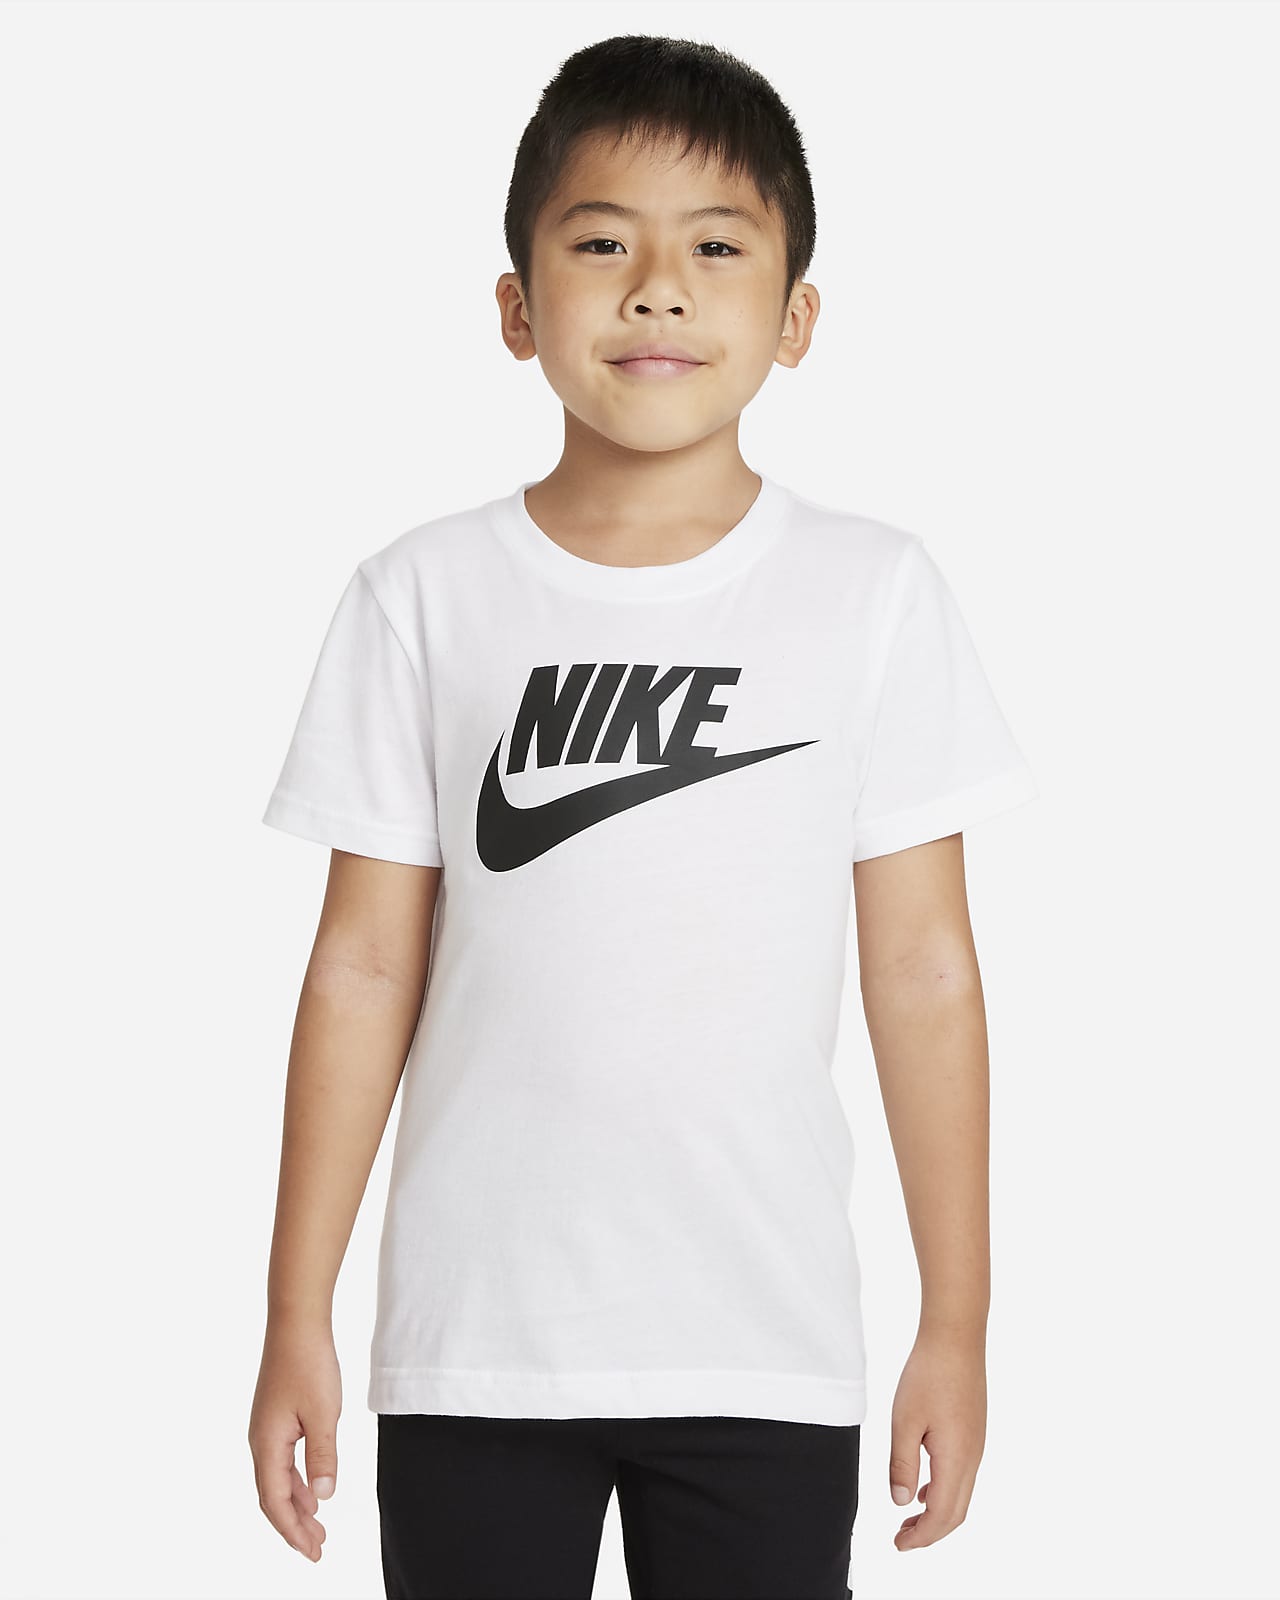 Nike Camiseta - Niño/a pequeño/a